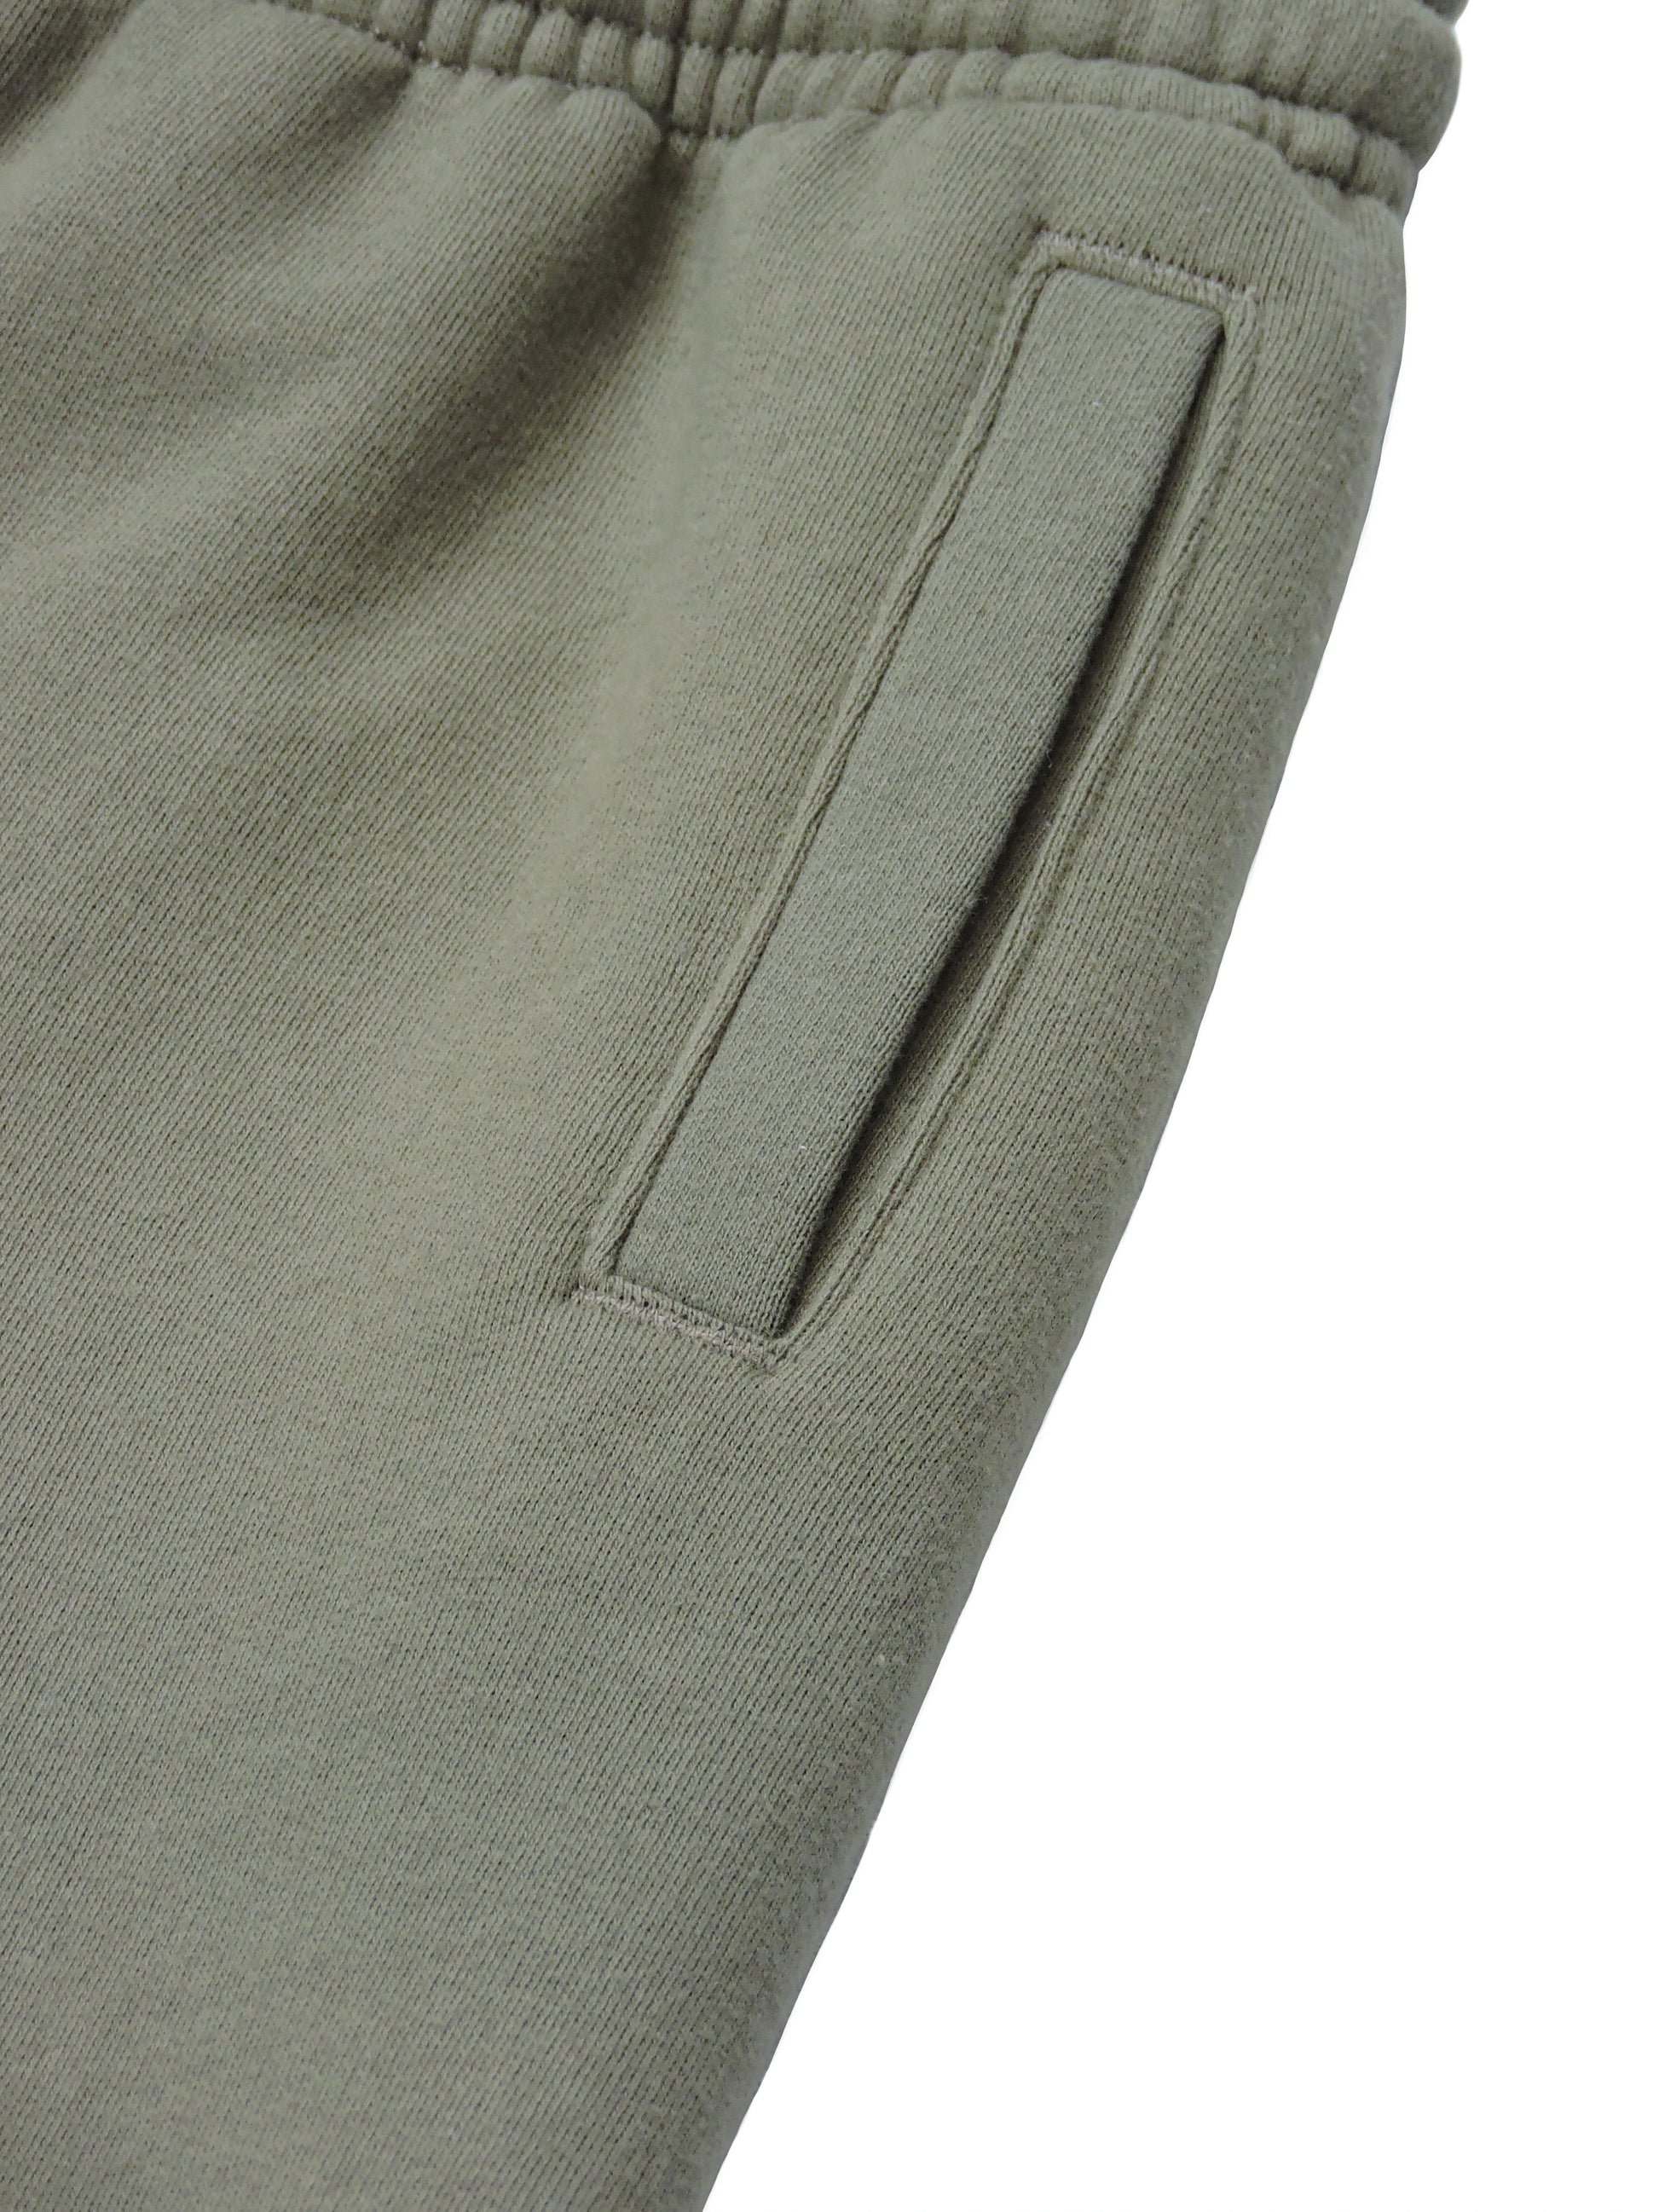 Wholesale Cotton Pants Men Jogger Sweatpants Blank Black Custom Design  Pants - China Pants and Casual Pants price